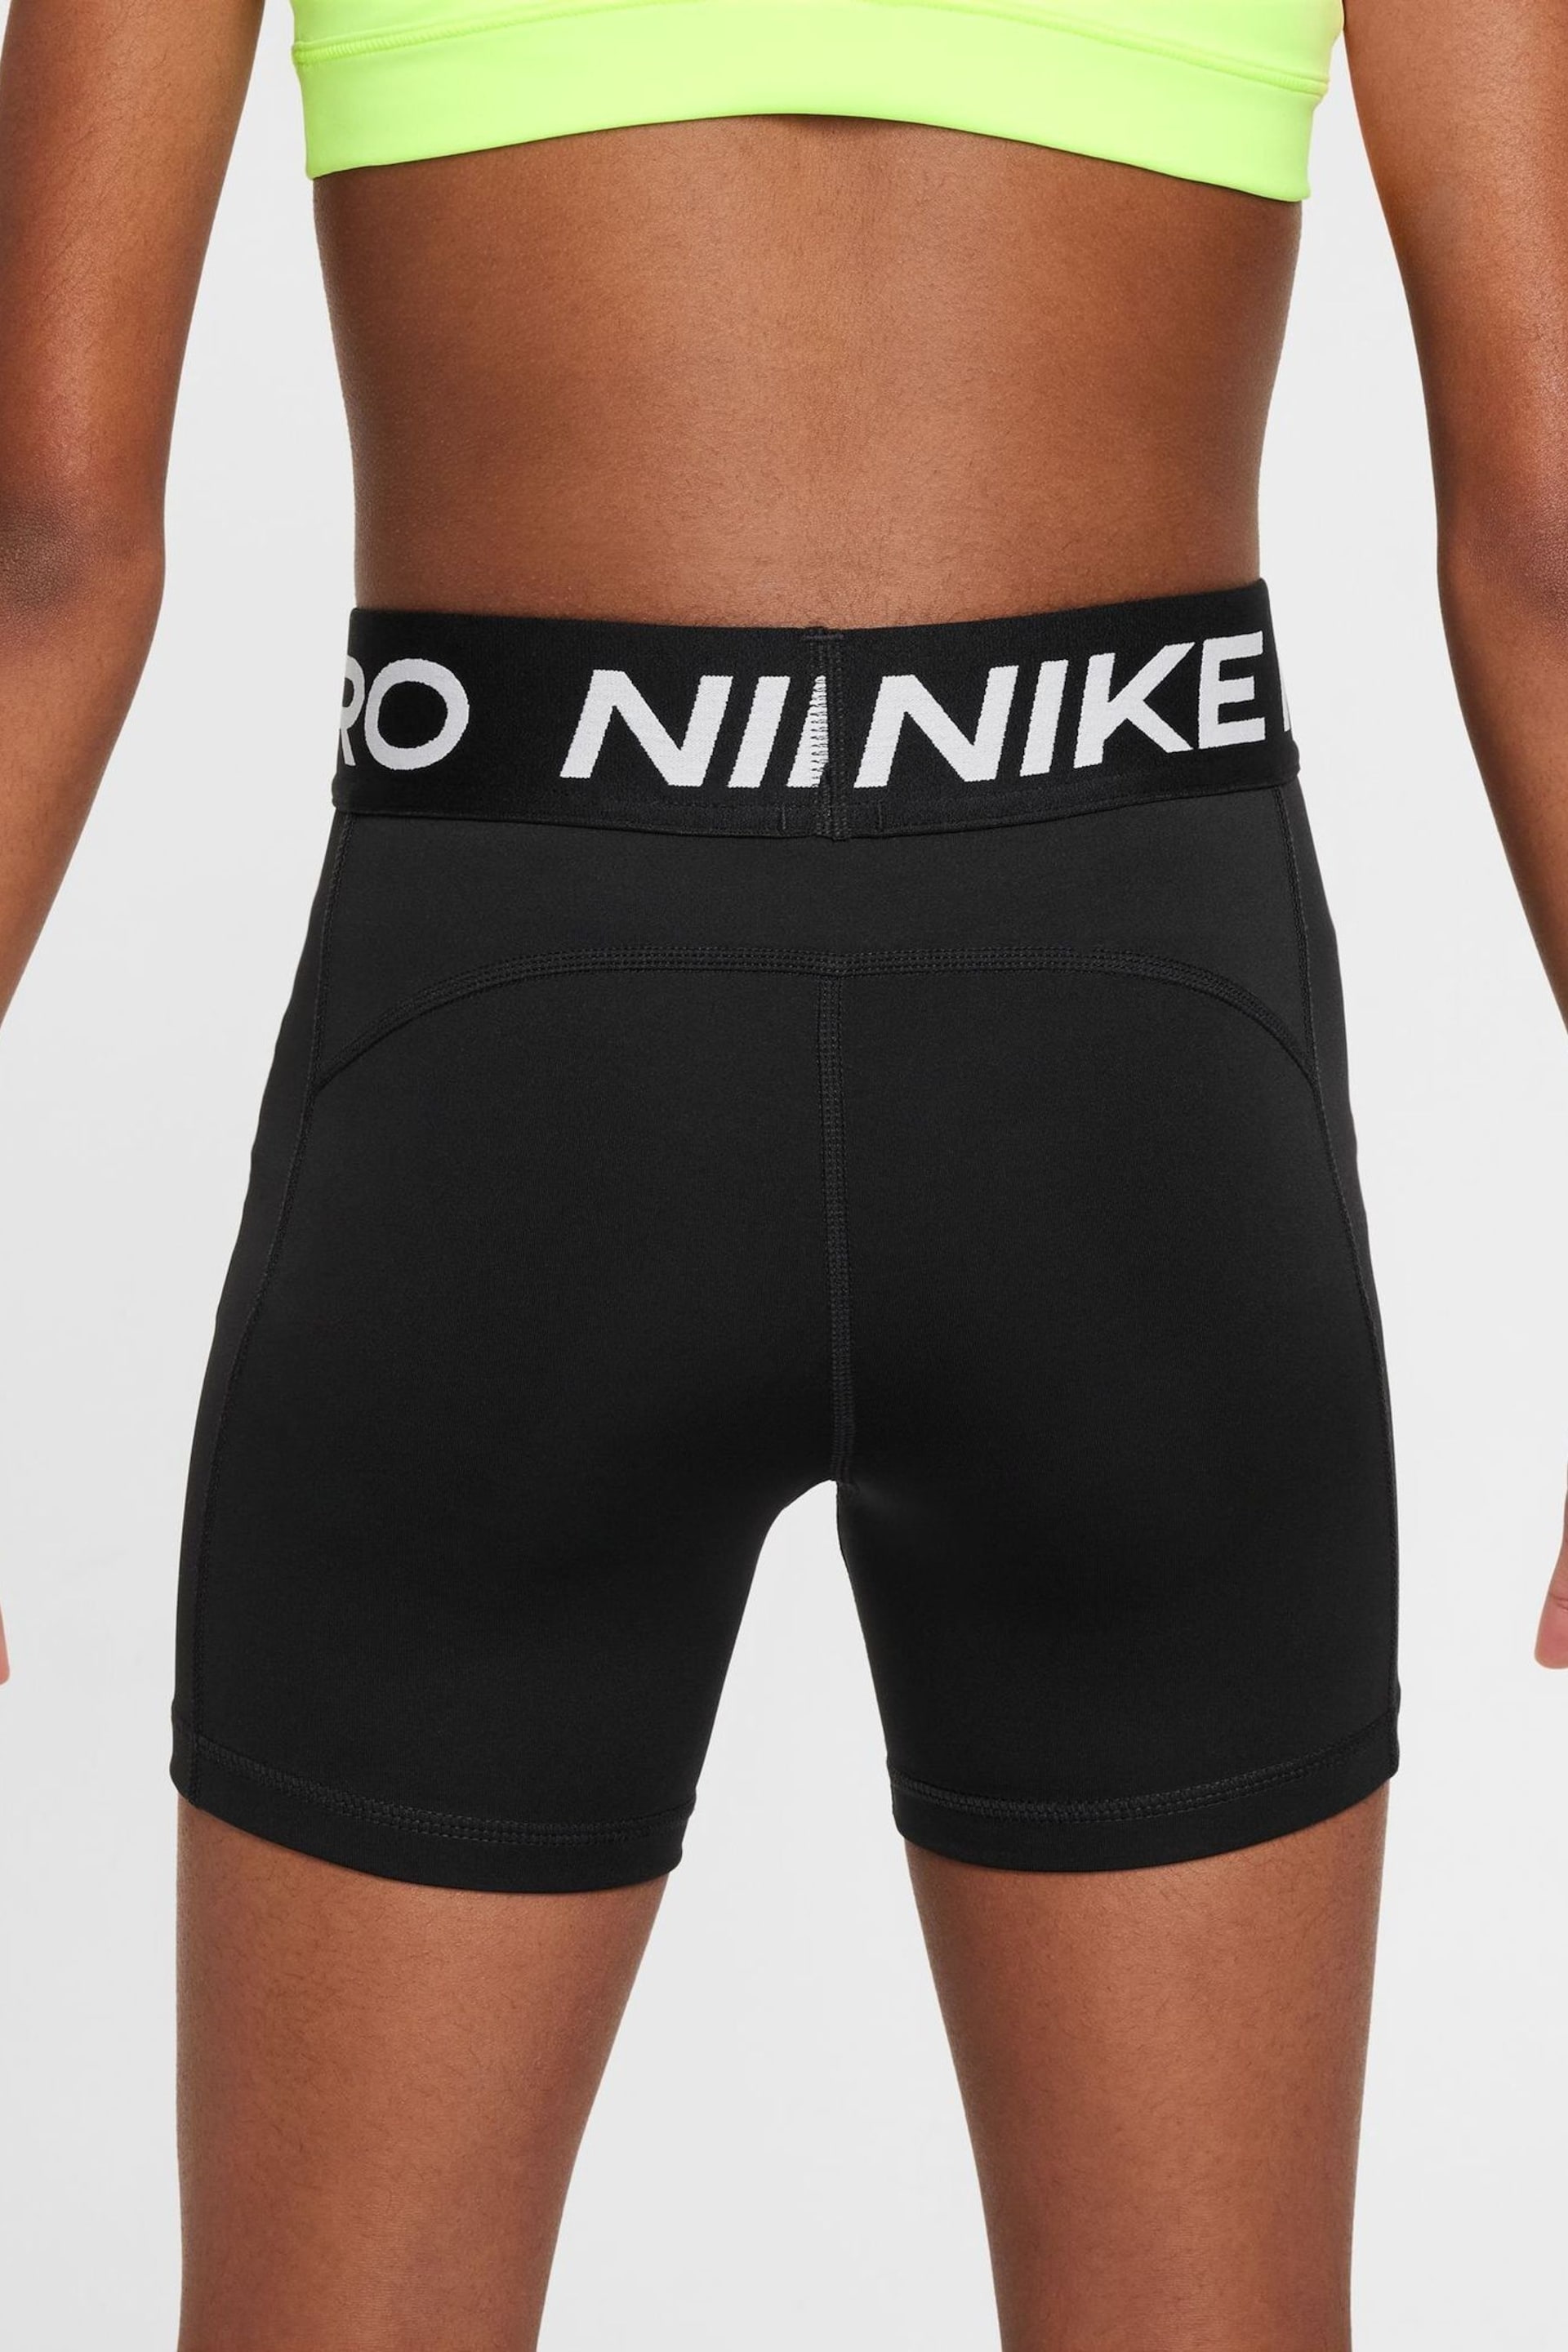 Nike Black Pro 3 Inch Period Leak Protection Shorts - Image 3 of 6